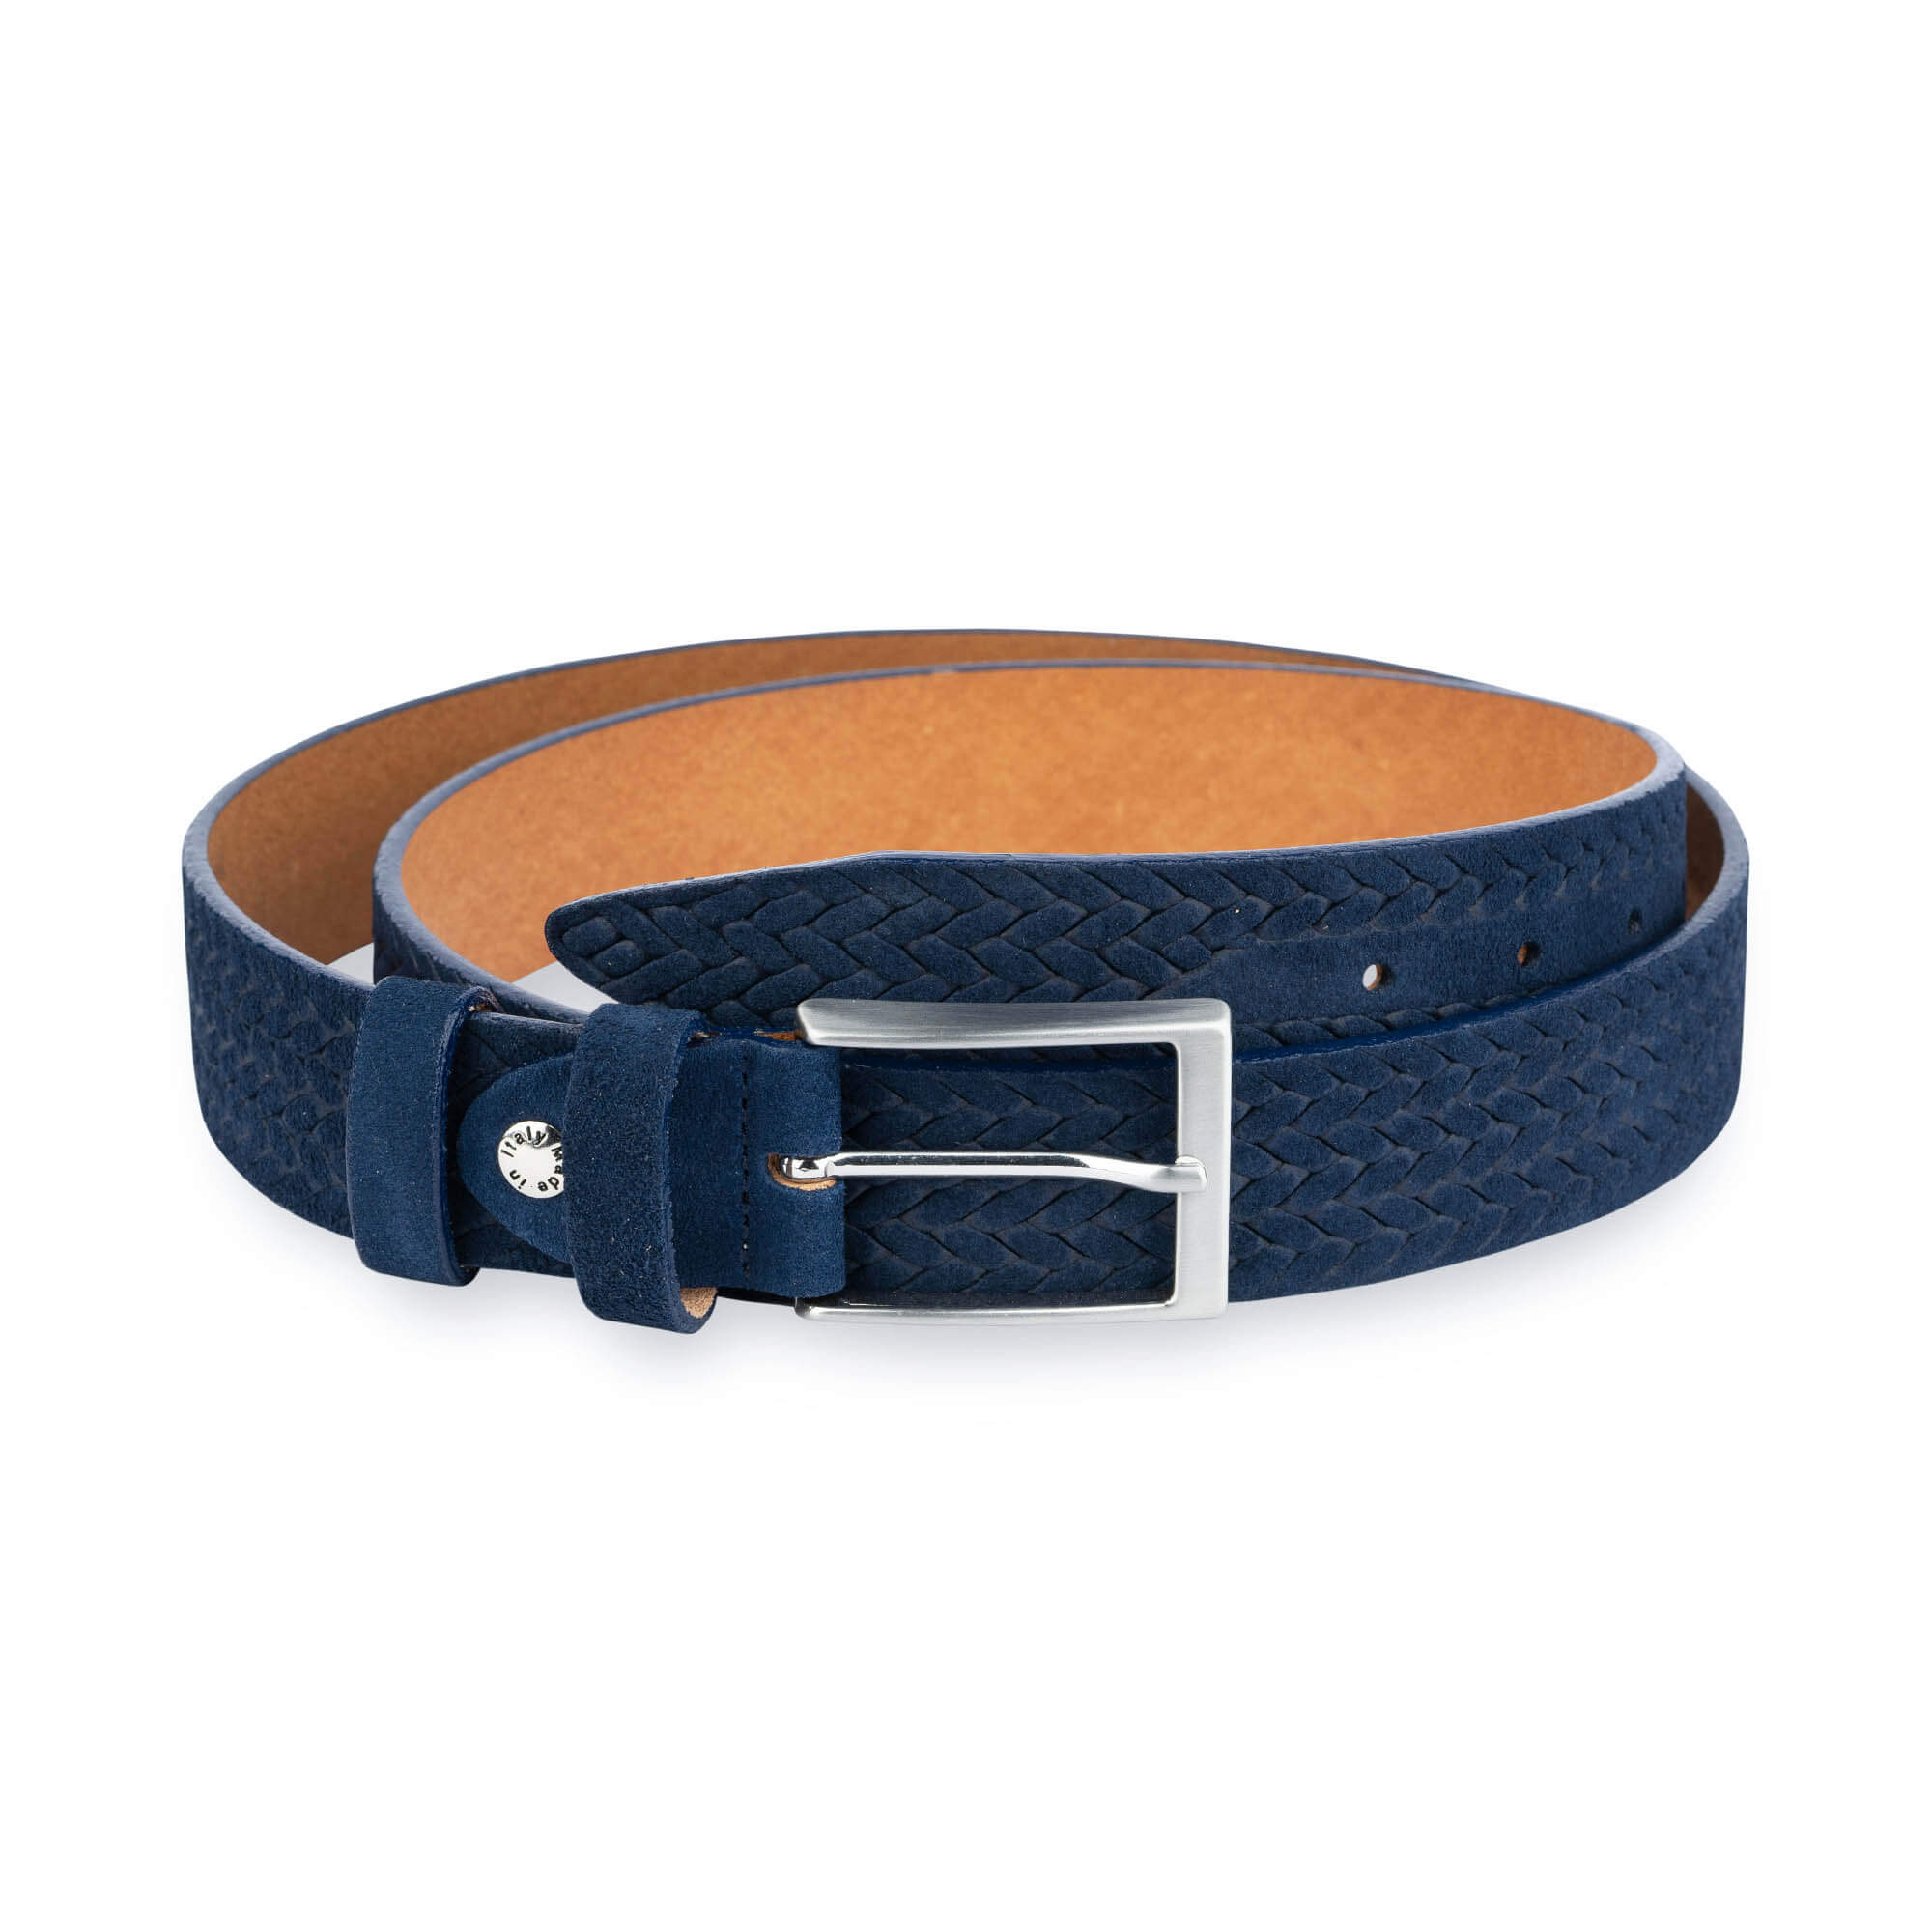 Buy Blue Suede Leather Belt - Woven Emboss 